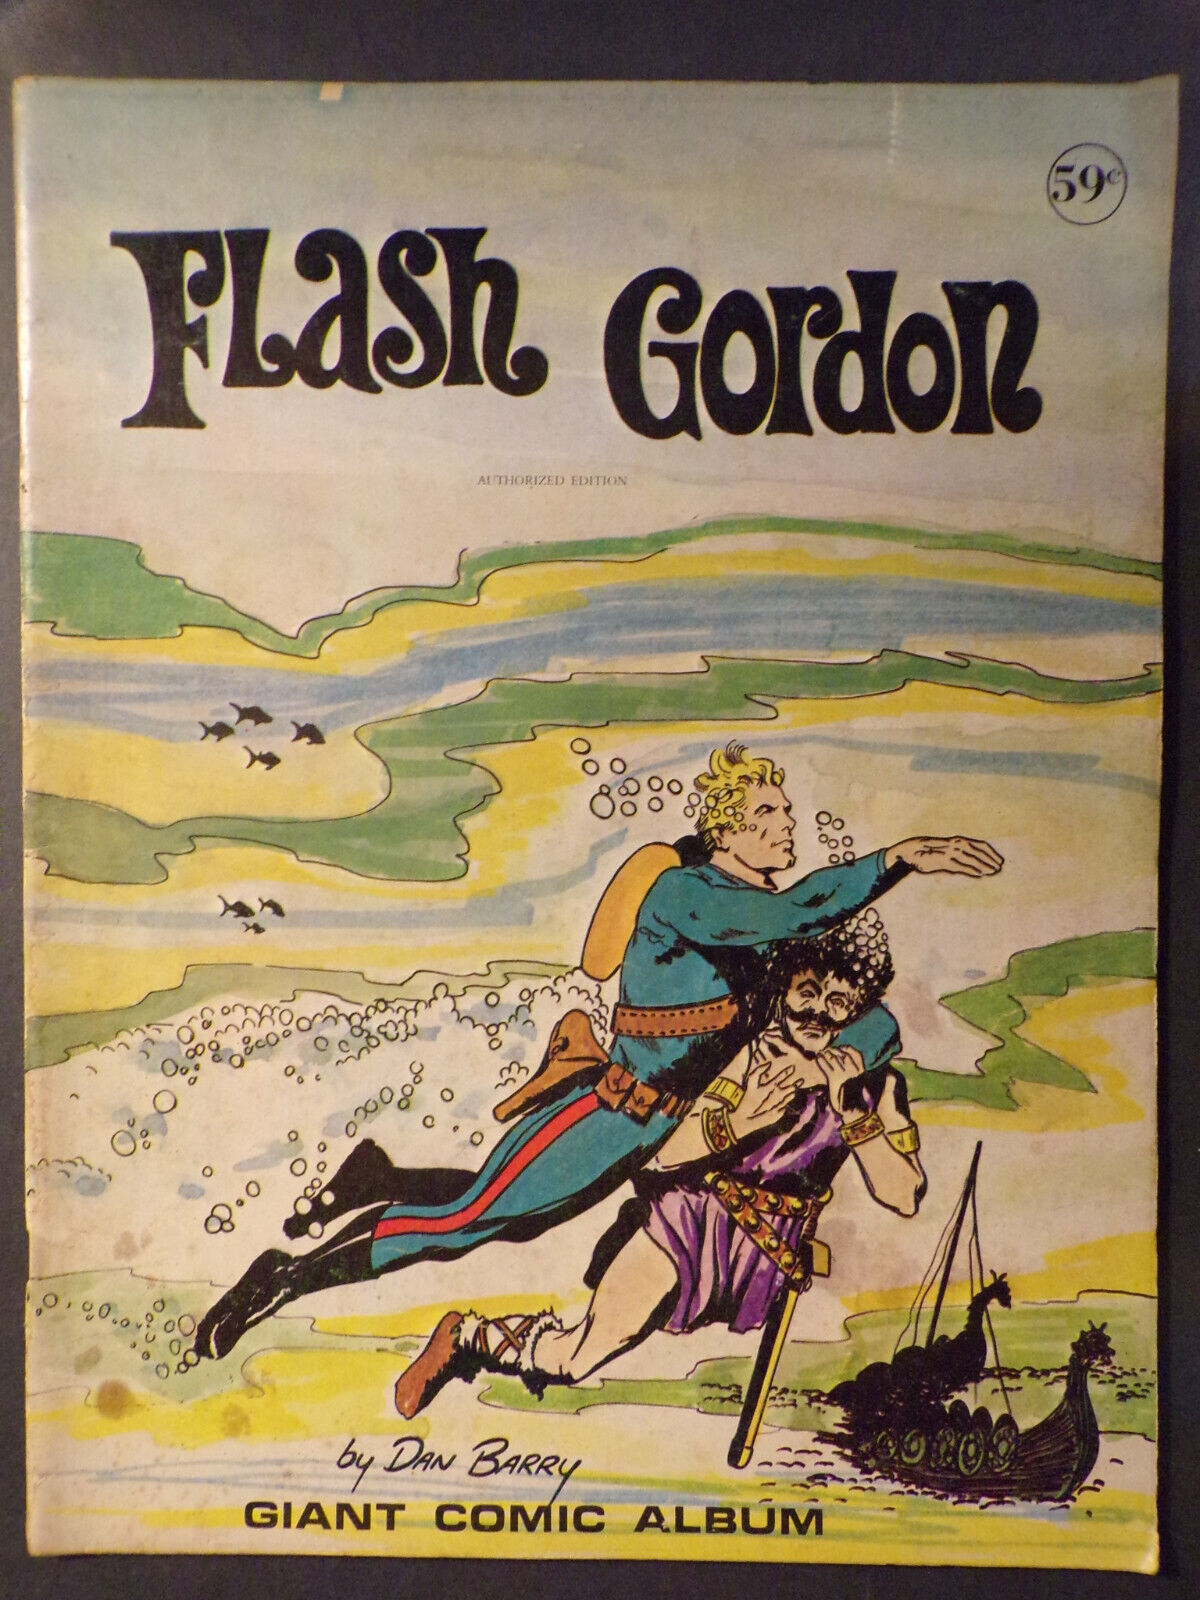 Flash Gordon, authorized edition (Modern Promotions 1973) Dan Barry, J91